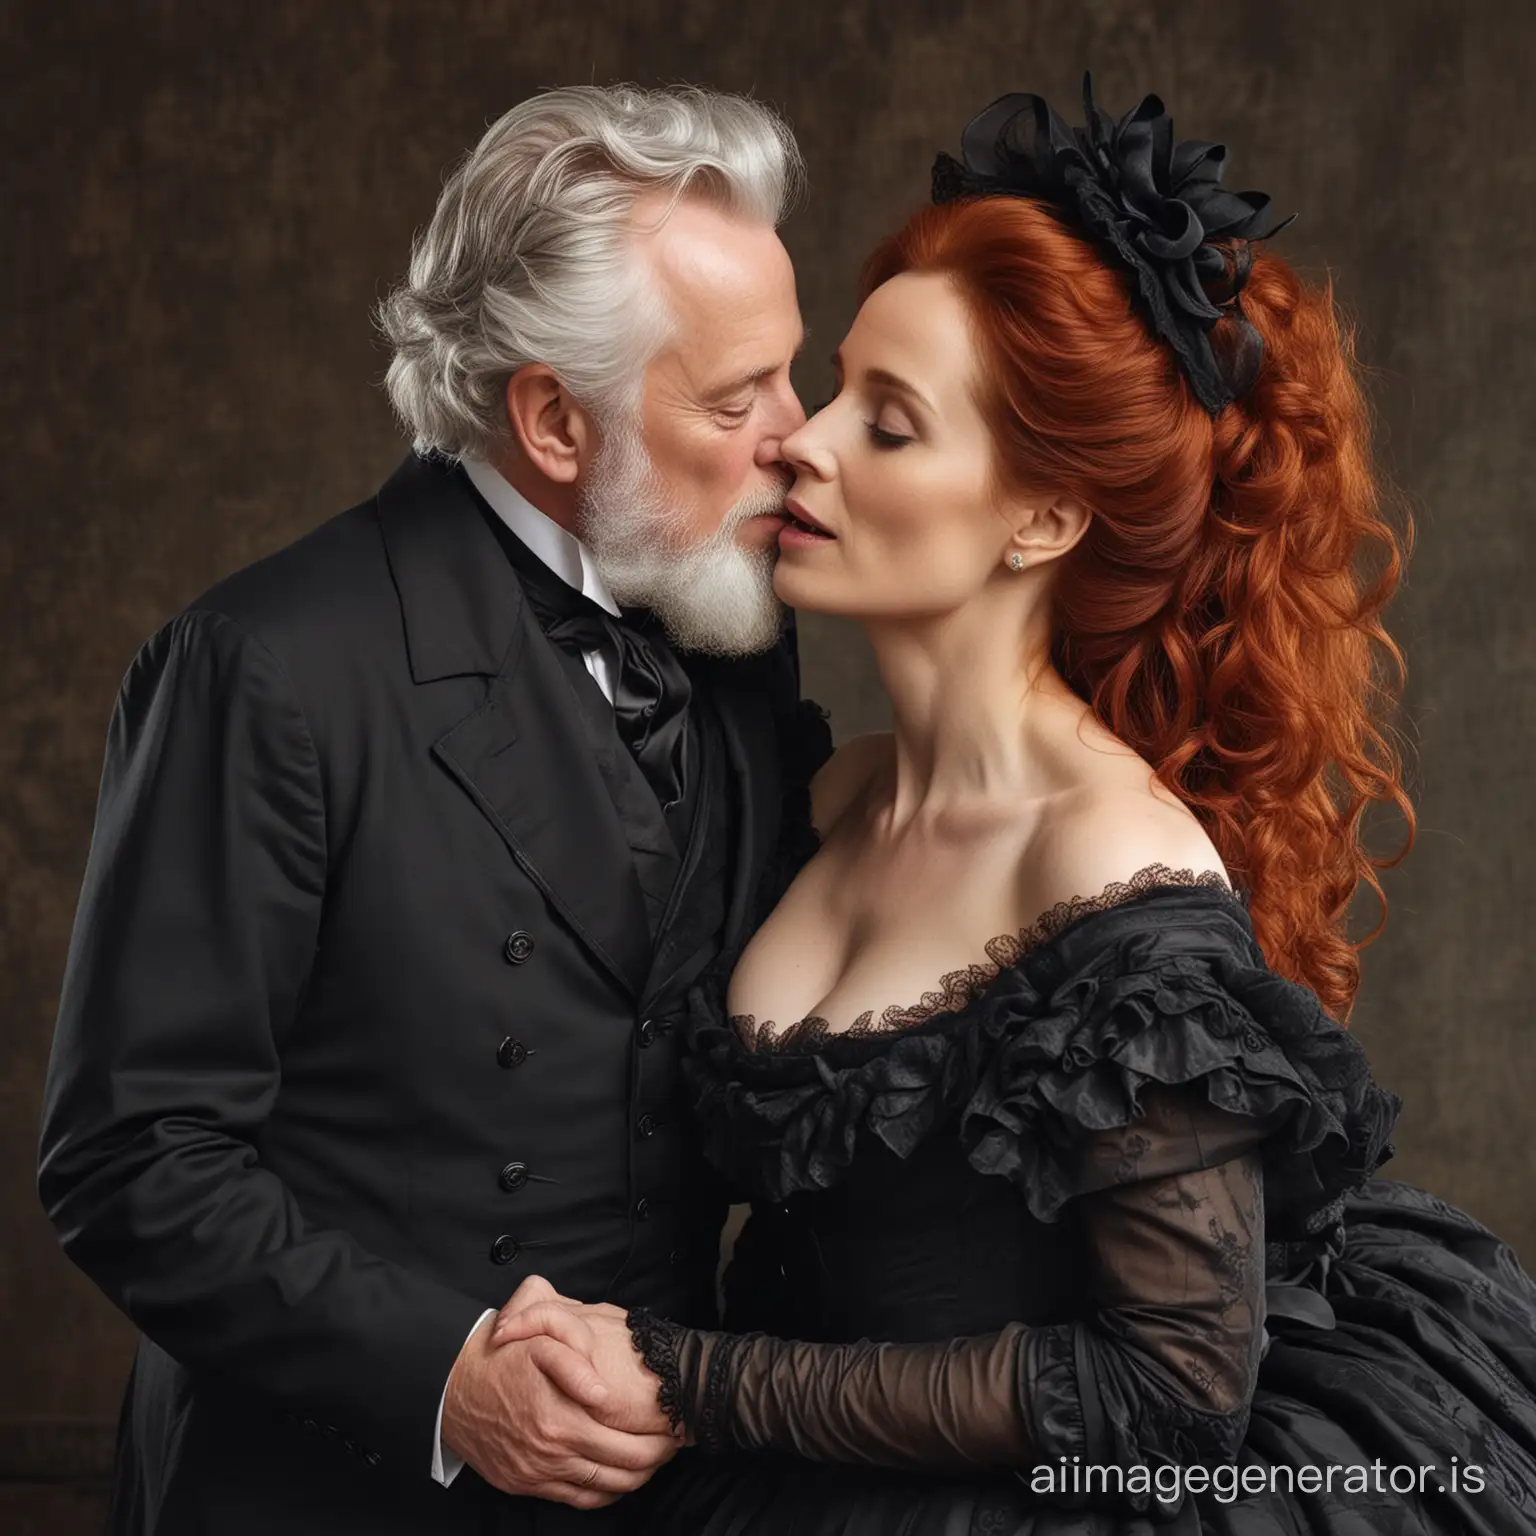 Victorian-Newlyweds-RedHaired-Bride-in-Poofy-Black-Dress-Kisses-Groom